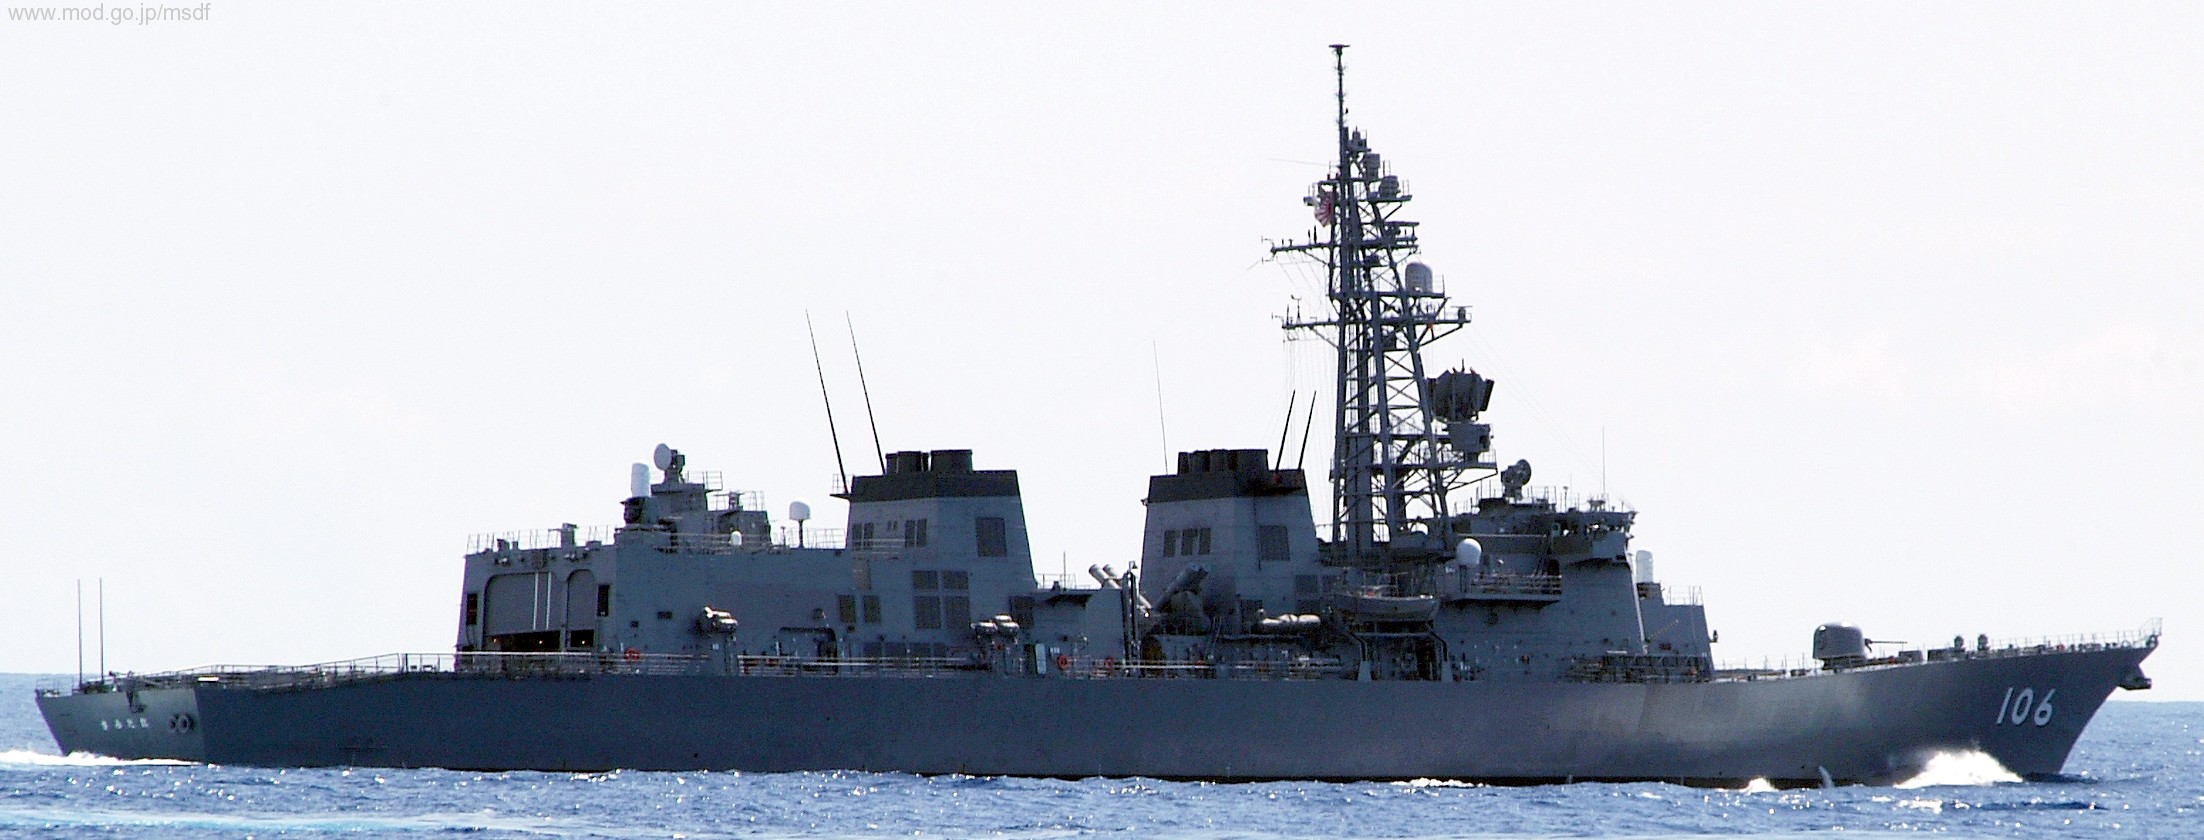 dd-106 js samidare murasame class destroyer japan maritime self defense force jmsdf 10